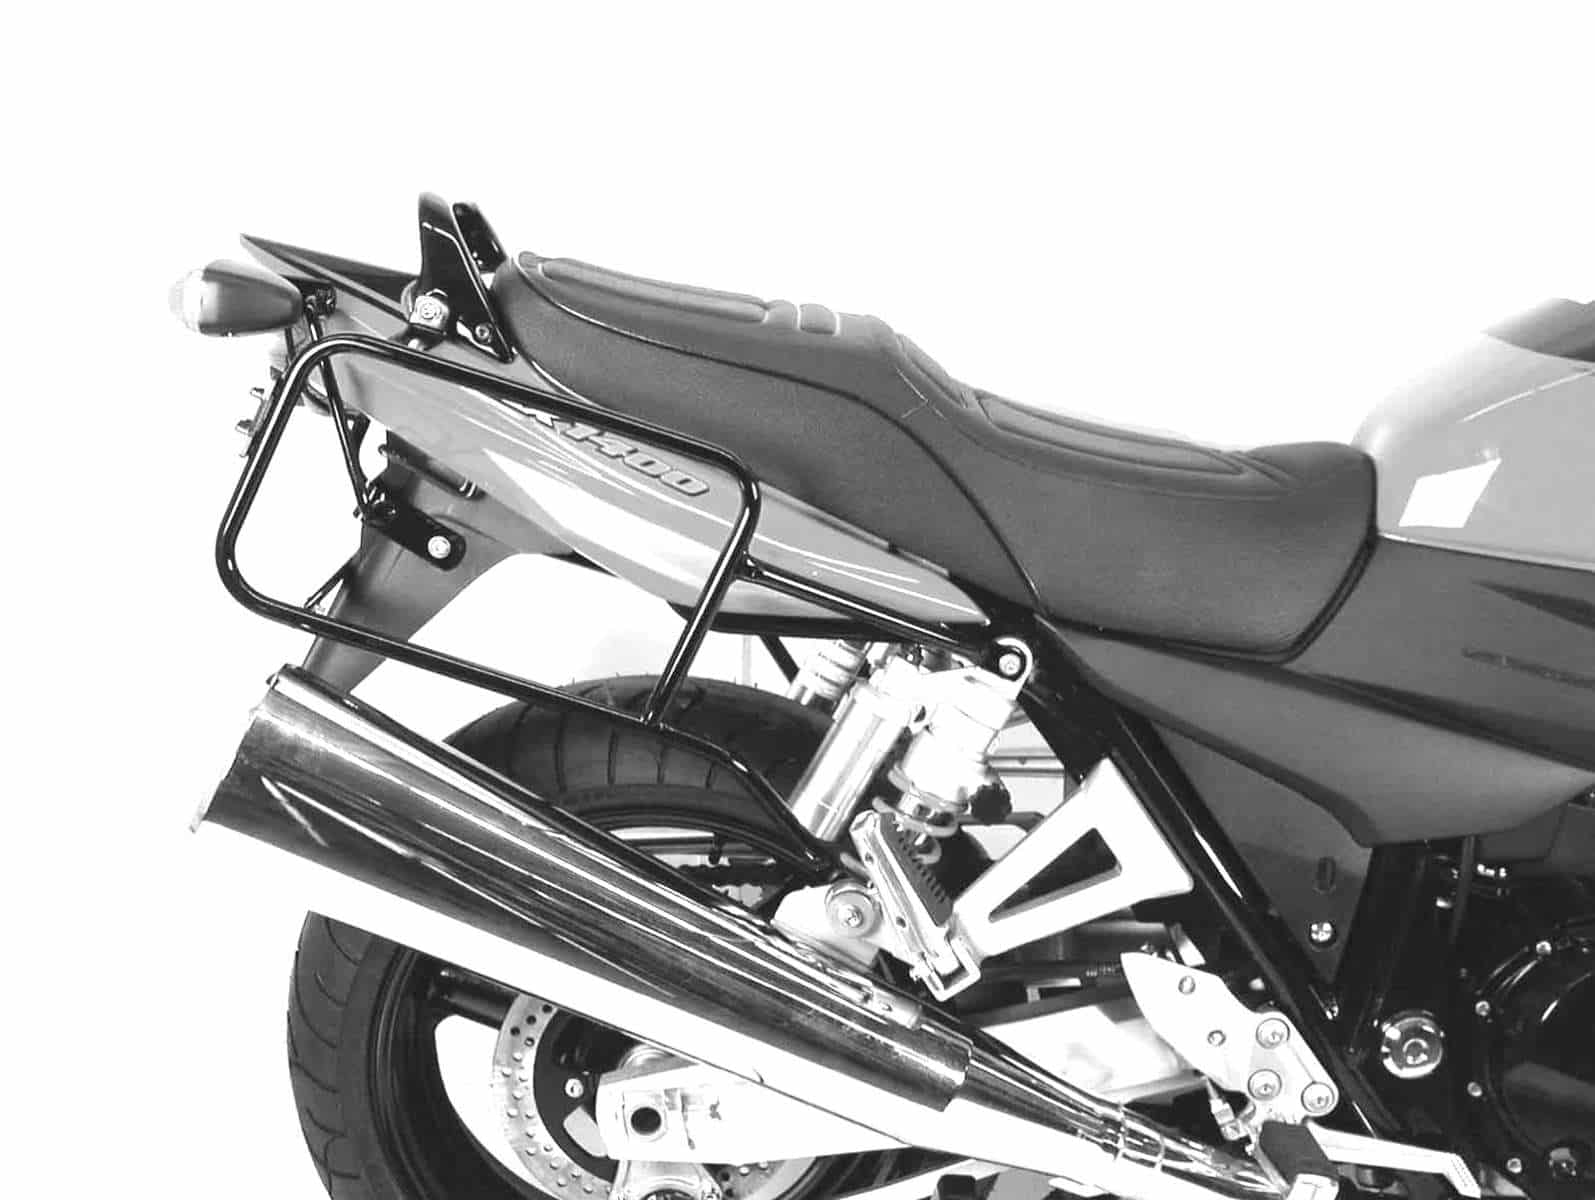 Sidecarrier permanent mounted black for Suzuki GSX 1400 (2005-2006)